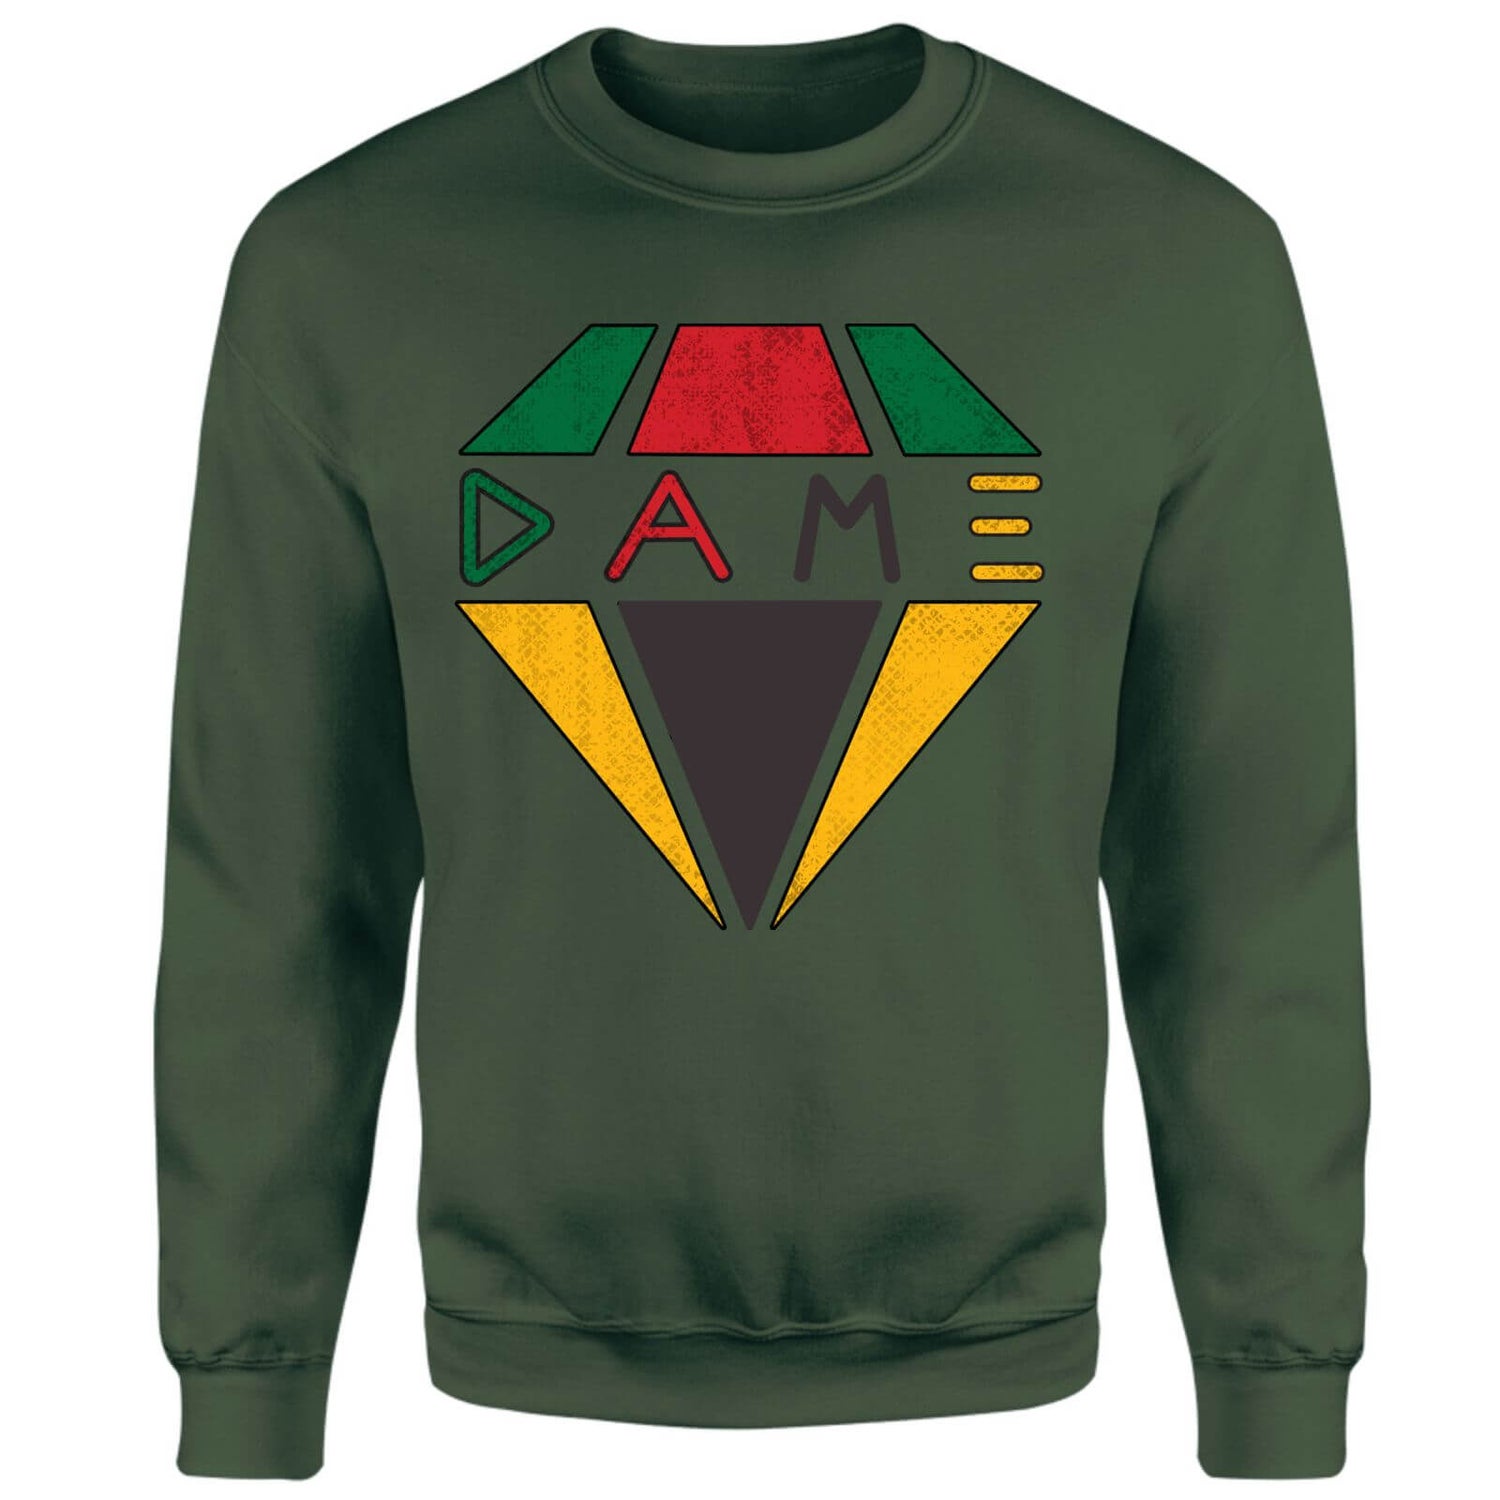 Creed DAME Diamond Logo Sweatshirt - Green